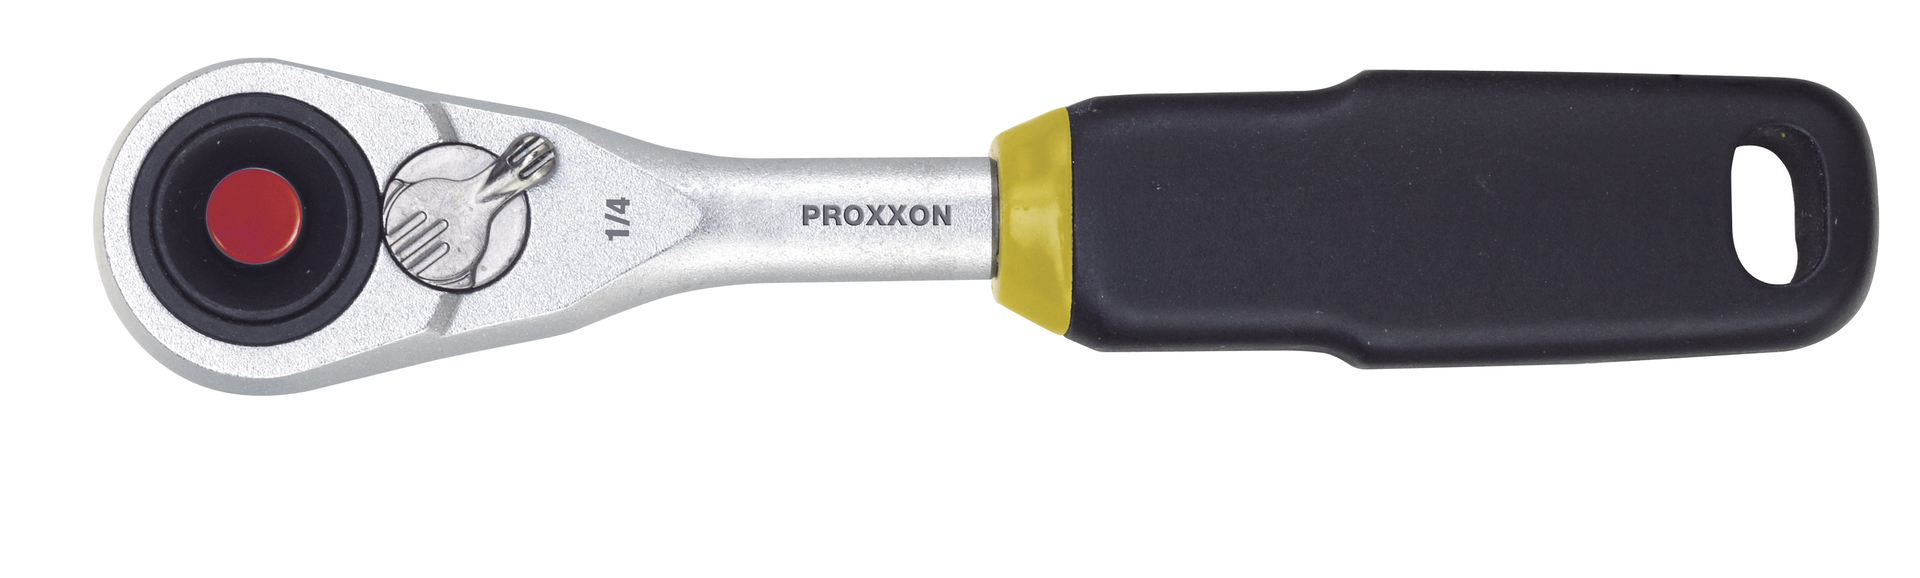 PROXXON GmbH Micro-Kompaktratsche 1/4 Zoll